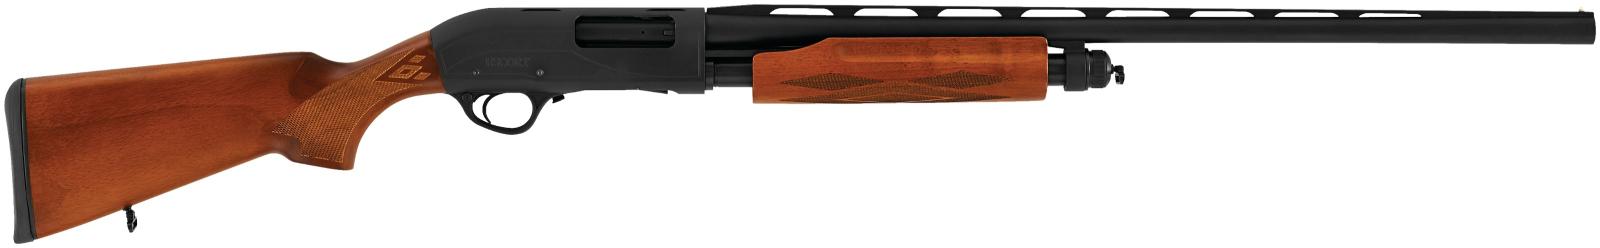 Escort WS Series 12 Gauge Shotgun